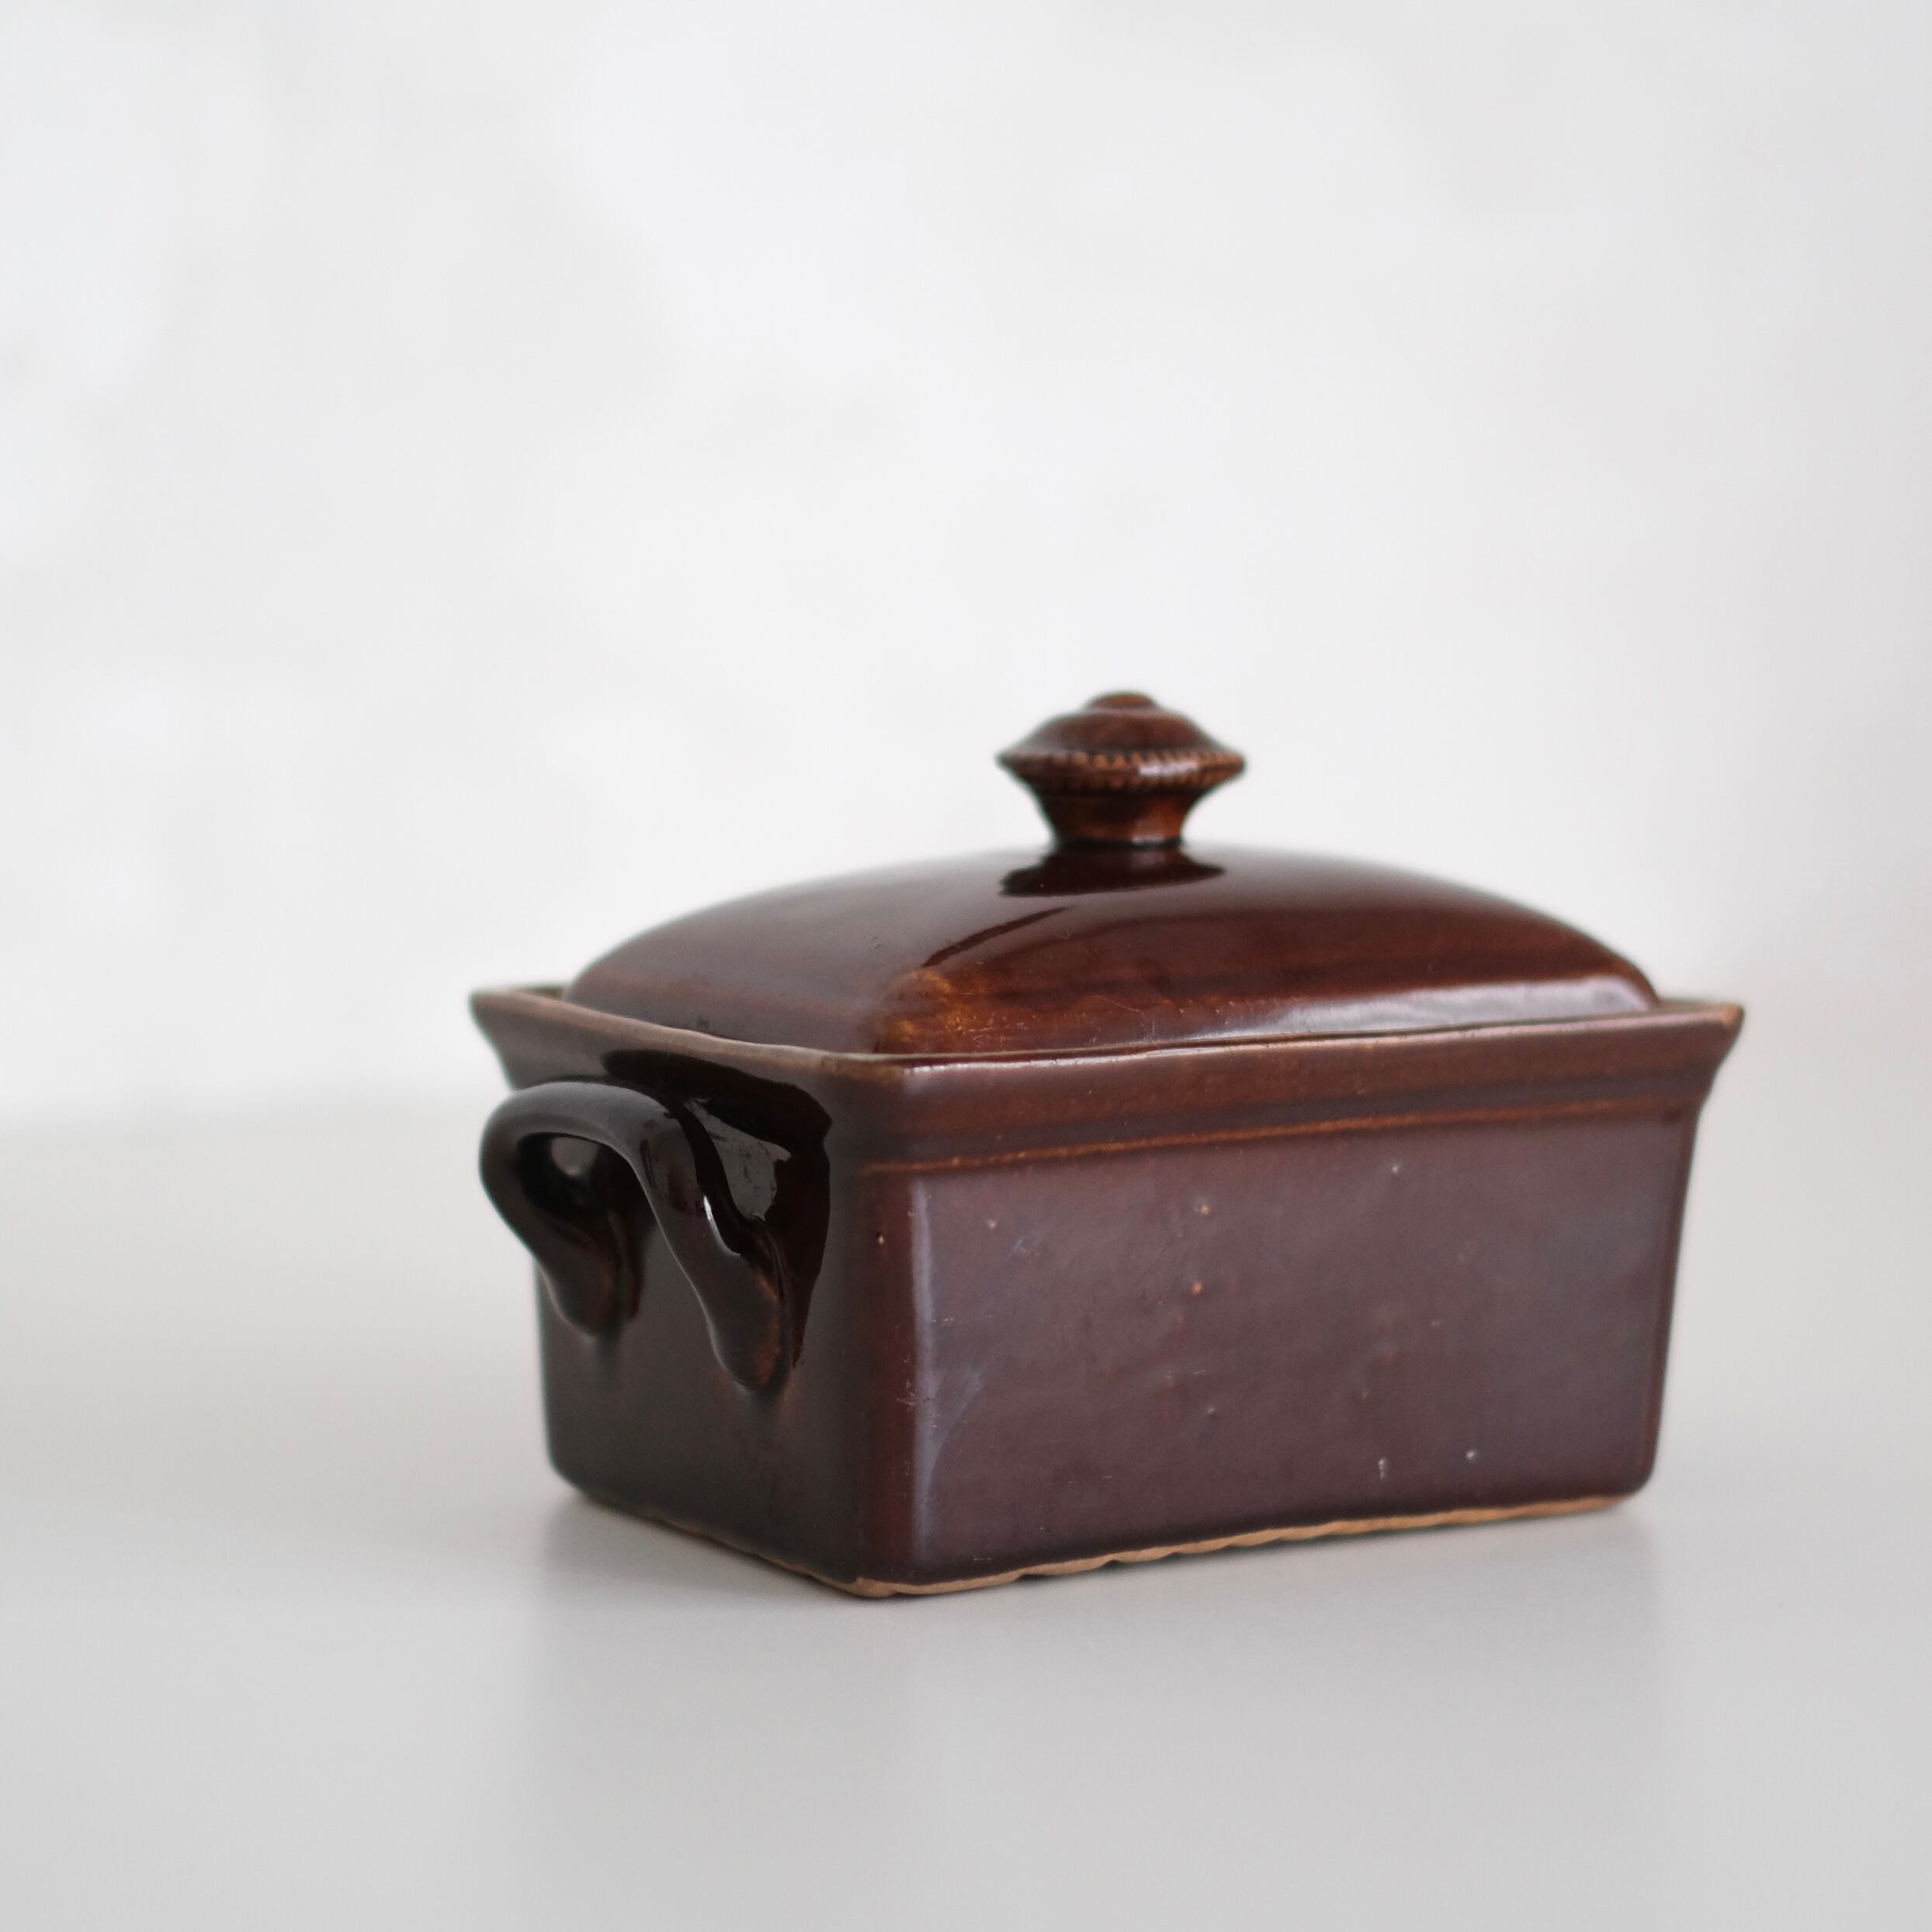 Terrine Pot / France Antique テリーヌポット / アンティーク陶器